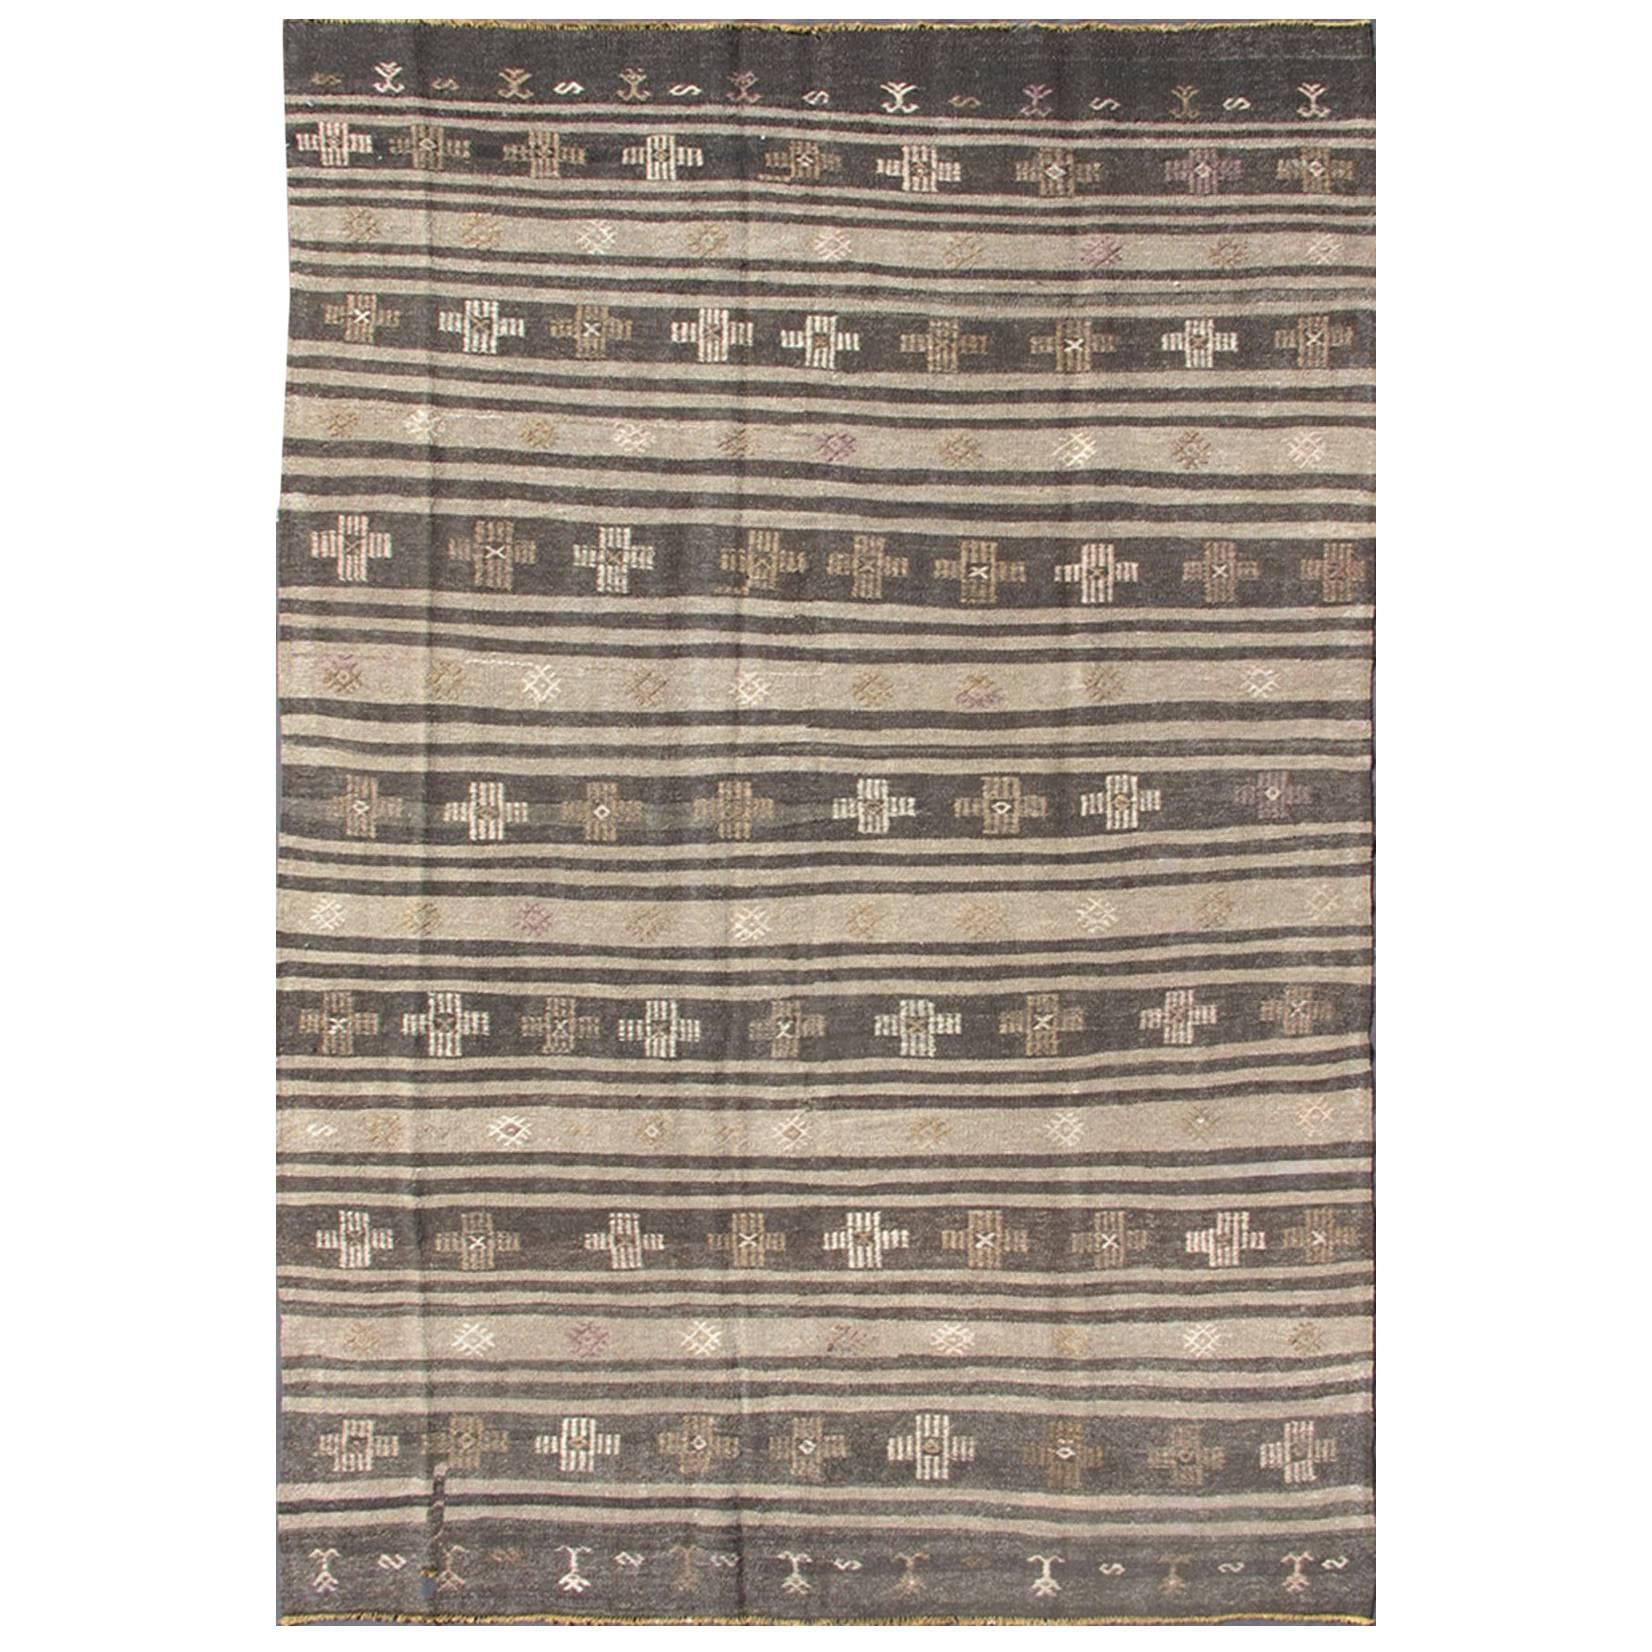 Tribal Turkish Kilim Carpet with Striped Geometric Pattern in Earth Tones